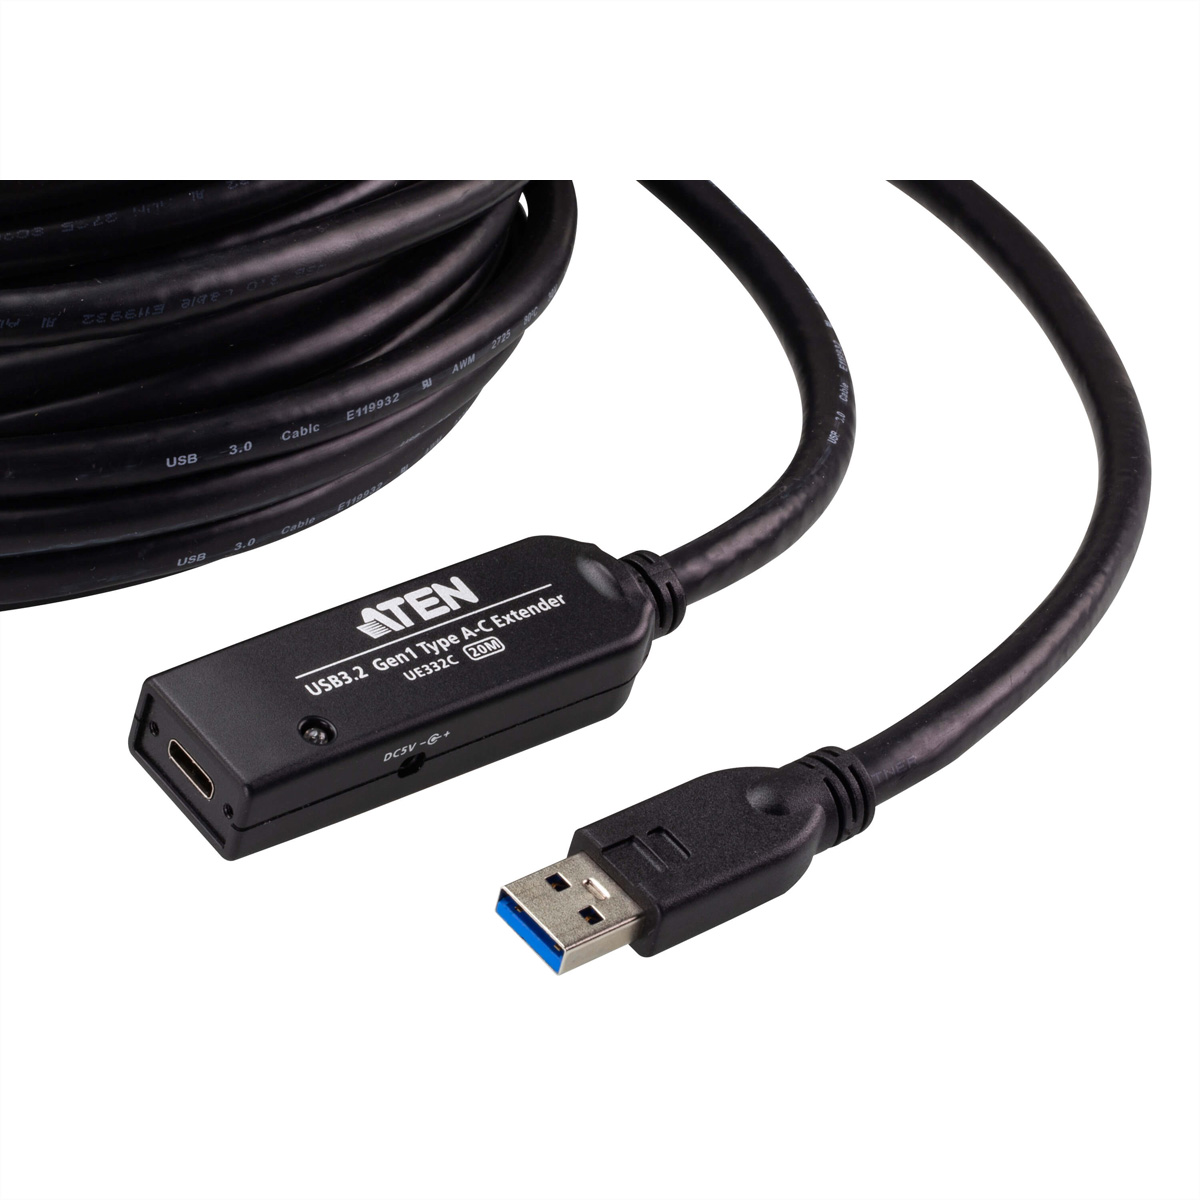 ATEN UE332C USB-A 3.2 Kabel Gen1zu Extender 20m 3.2 USB Verlängerungskabel USB-C